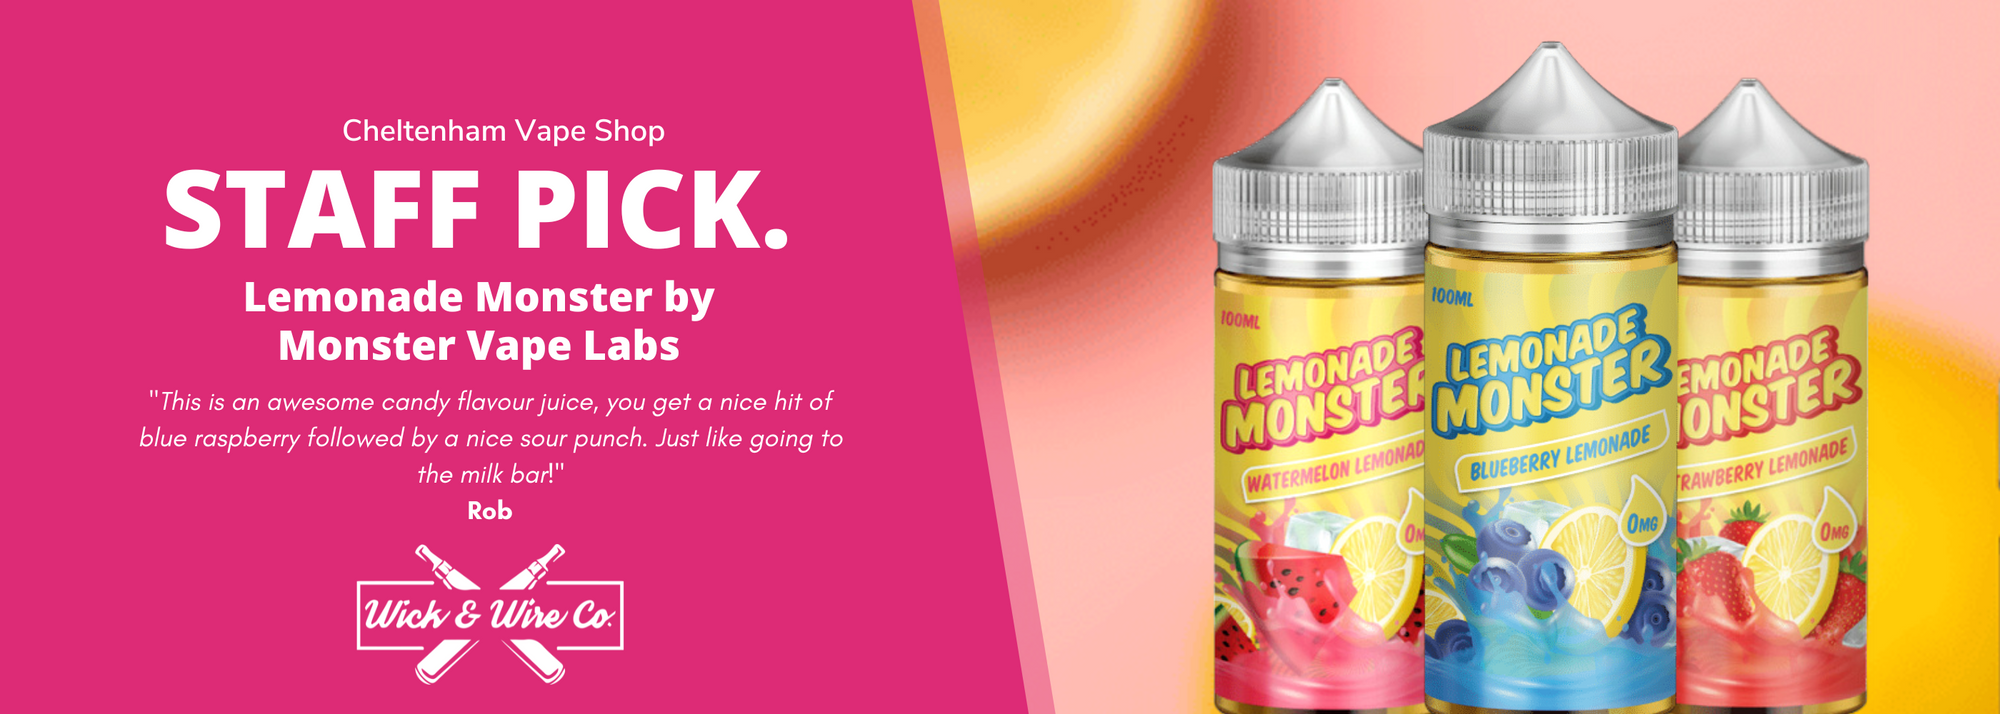 Buy Lemonade Monster Vape Juice - Wick and Wire Co Melbourne Vape Shop, Victoria Australia